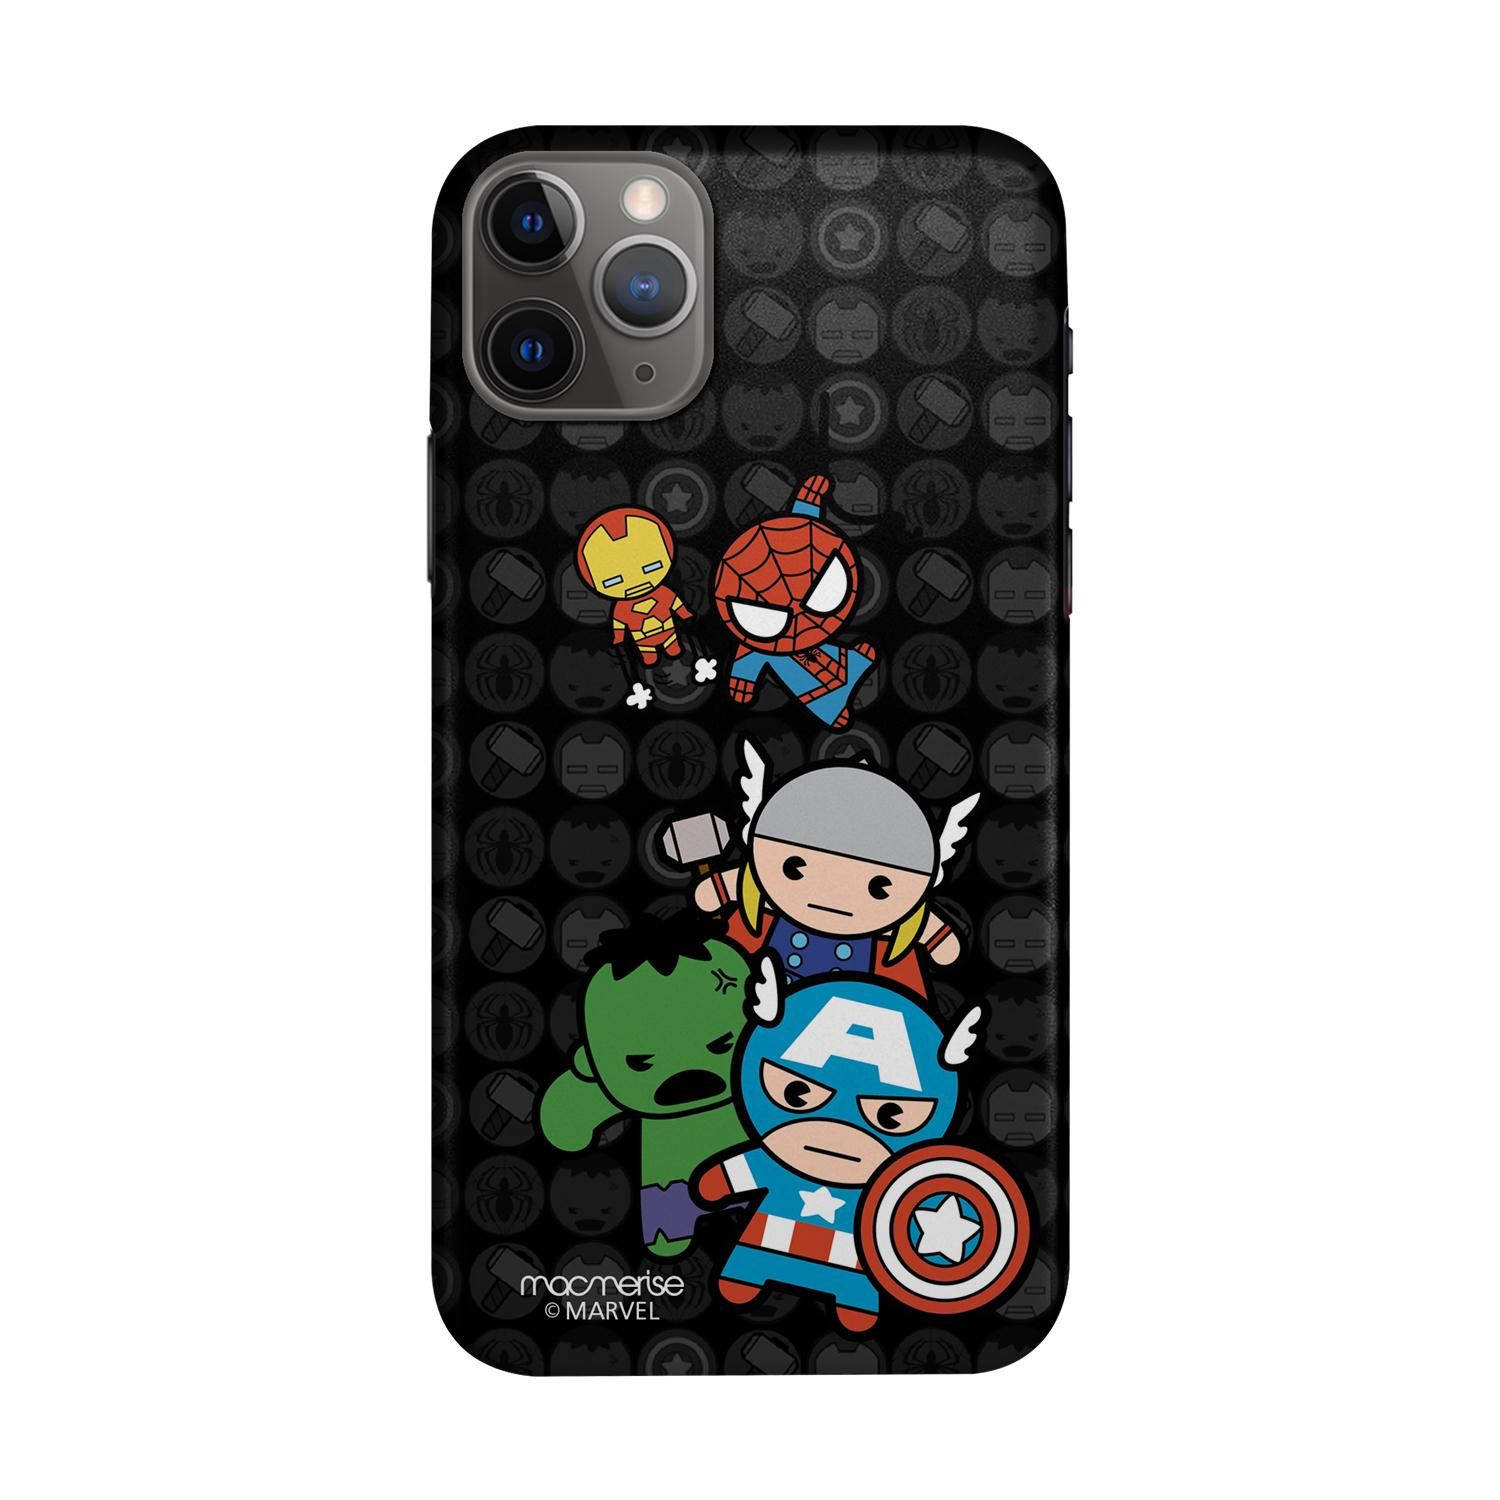 Buy Kawaii Art Marvel Comics - Sleek Phone Case for iPhone 11 Pro Max Online